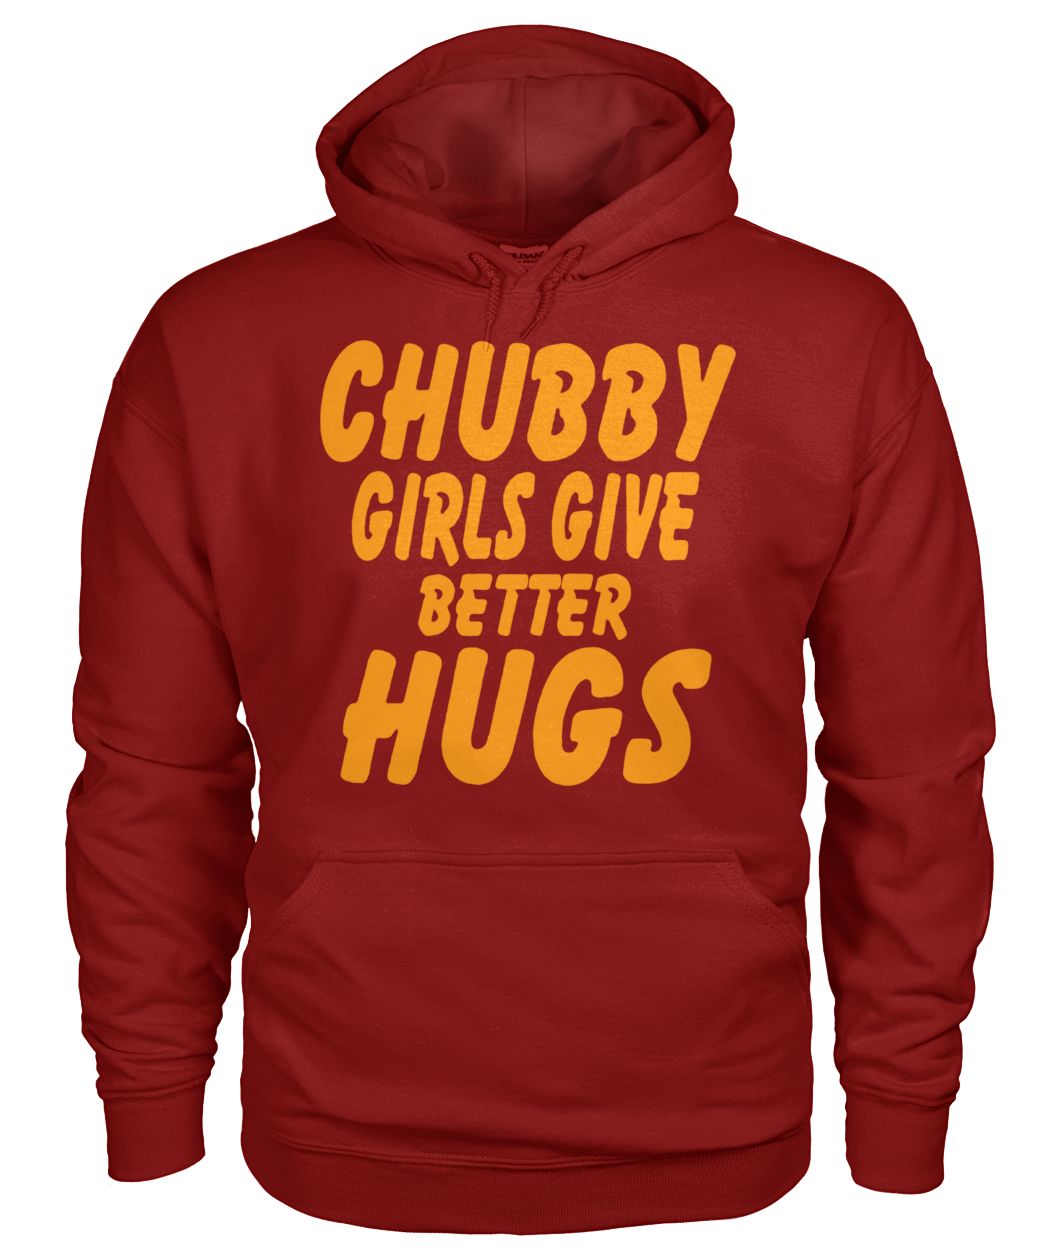 Chubby girls give better hugs gildan hoodie